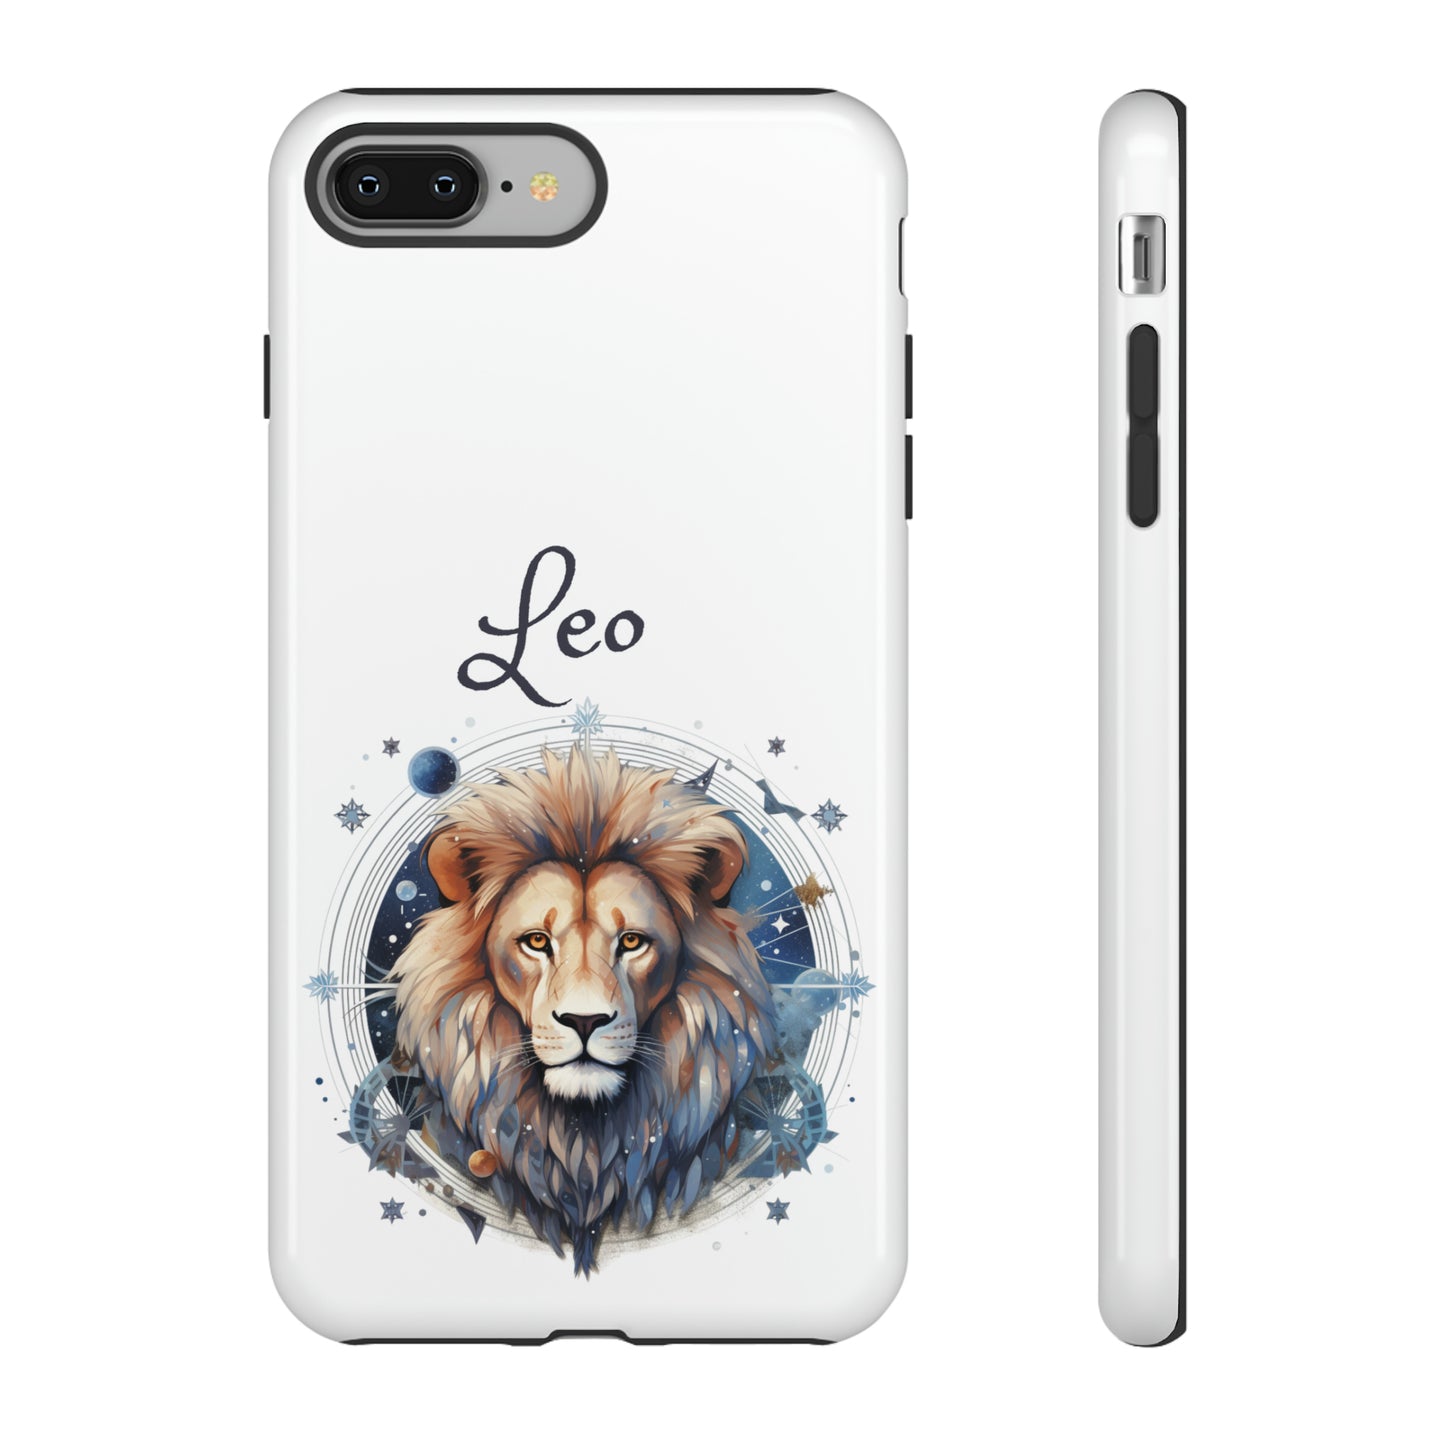 Leo Zodiac Horoscope Phone Case